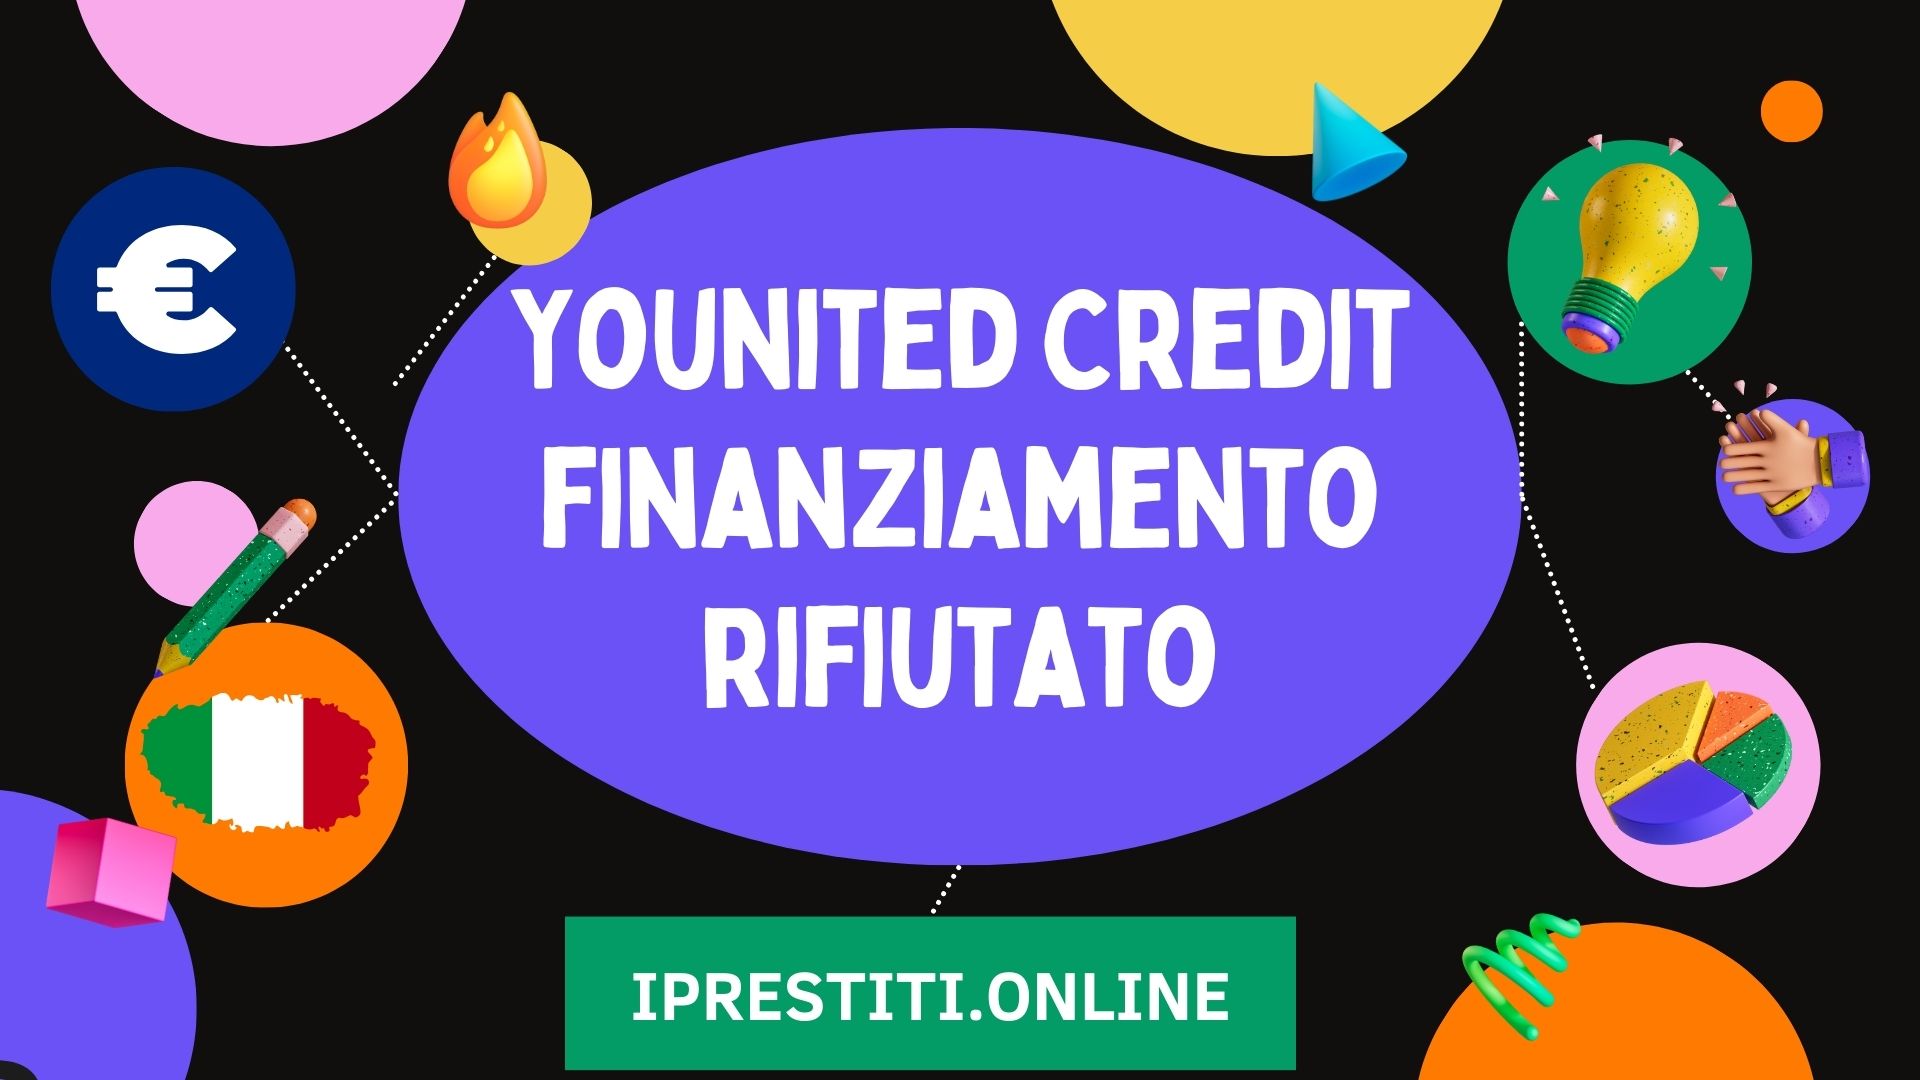 Younited Credit finanziamento rifiutato